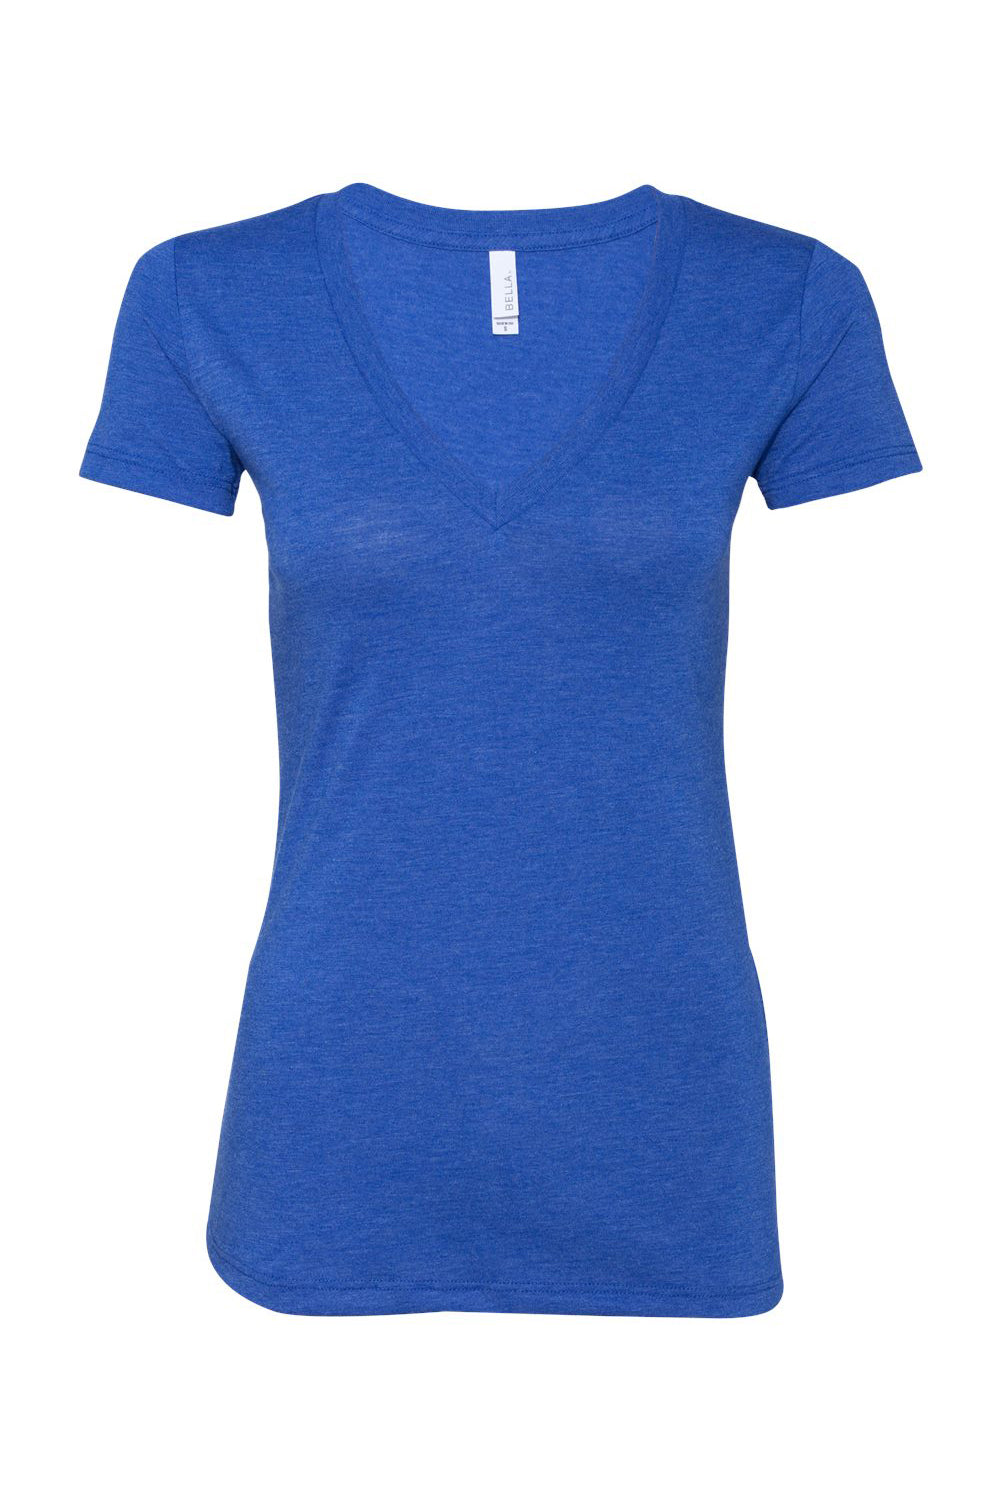 Bella + Canvas 8435 Womens Short Sleeve Deep V-Neck T-Shirt True Royal Blue Flat Front